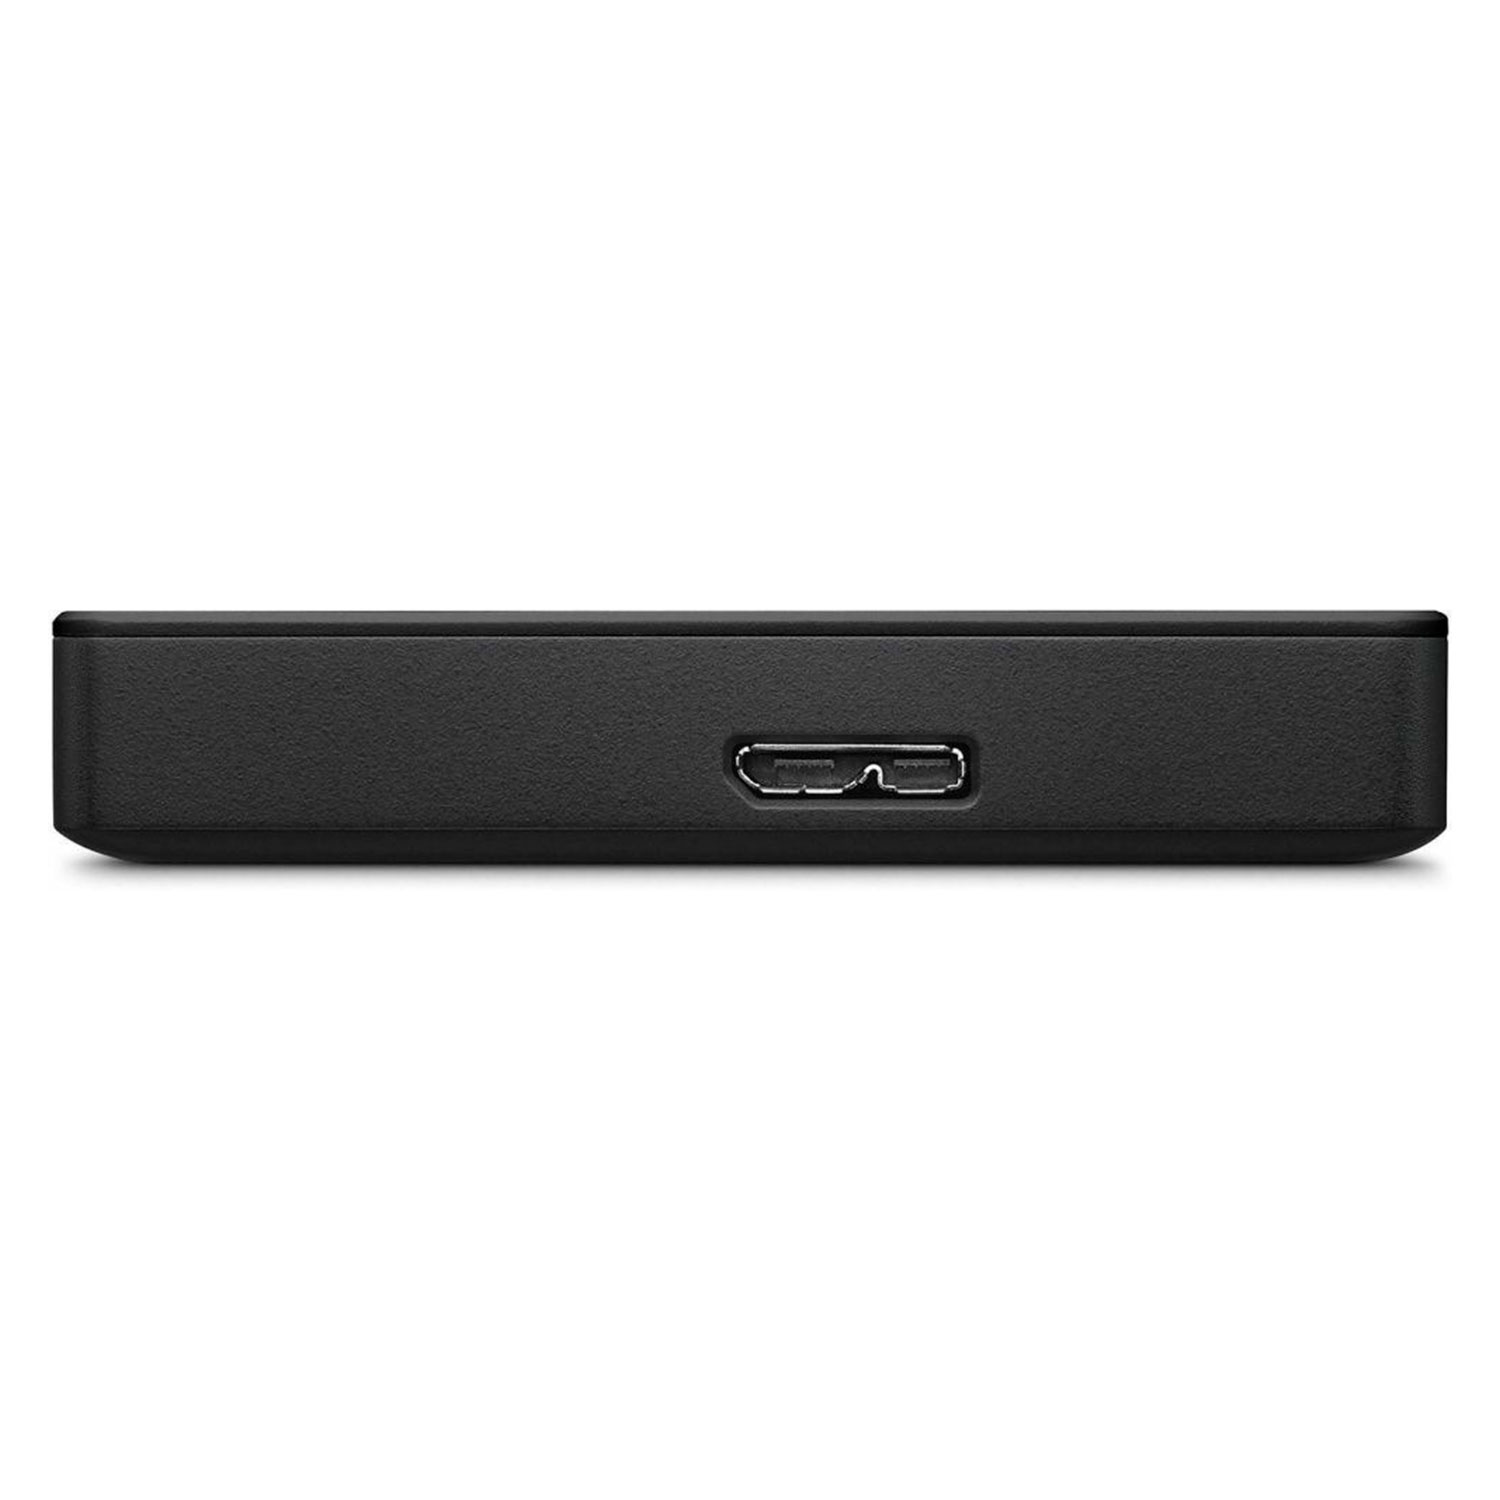 HD Externo Portátil Seagate Expansion 4TB 2.5" USB 3.0 - STGX4000400